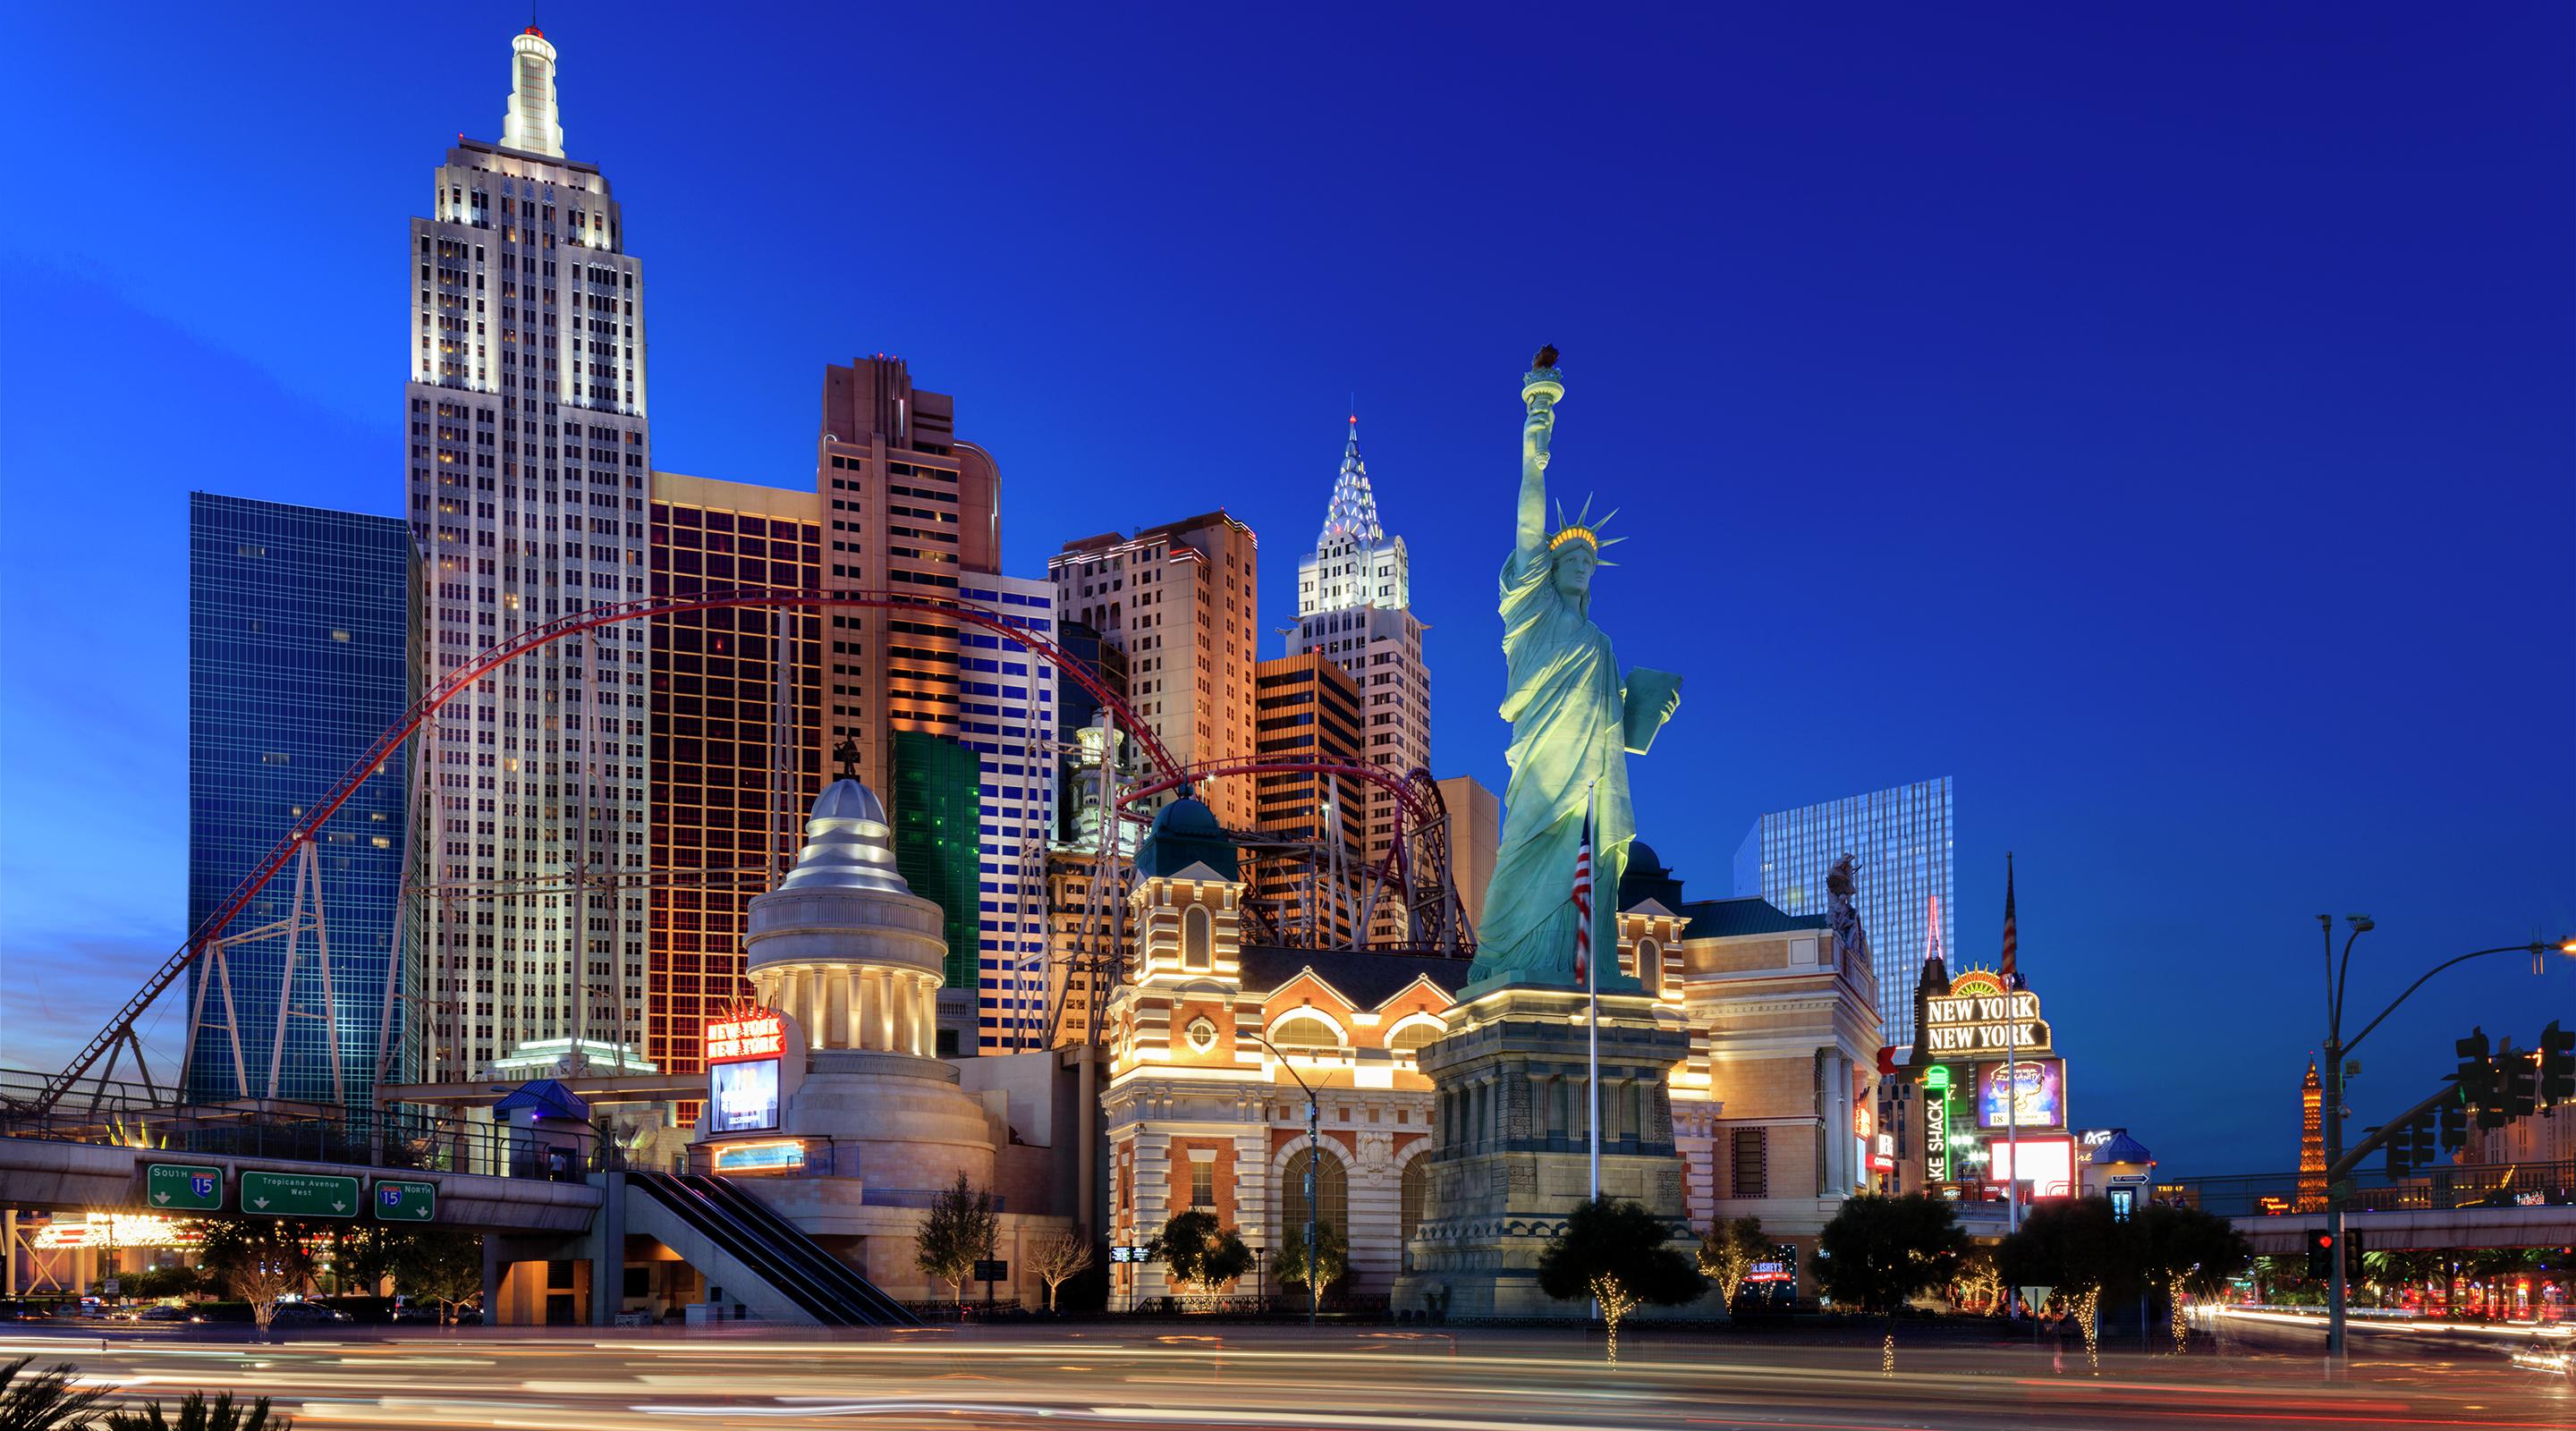 New York Hotel Vegas